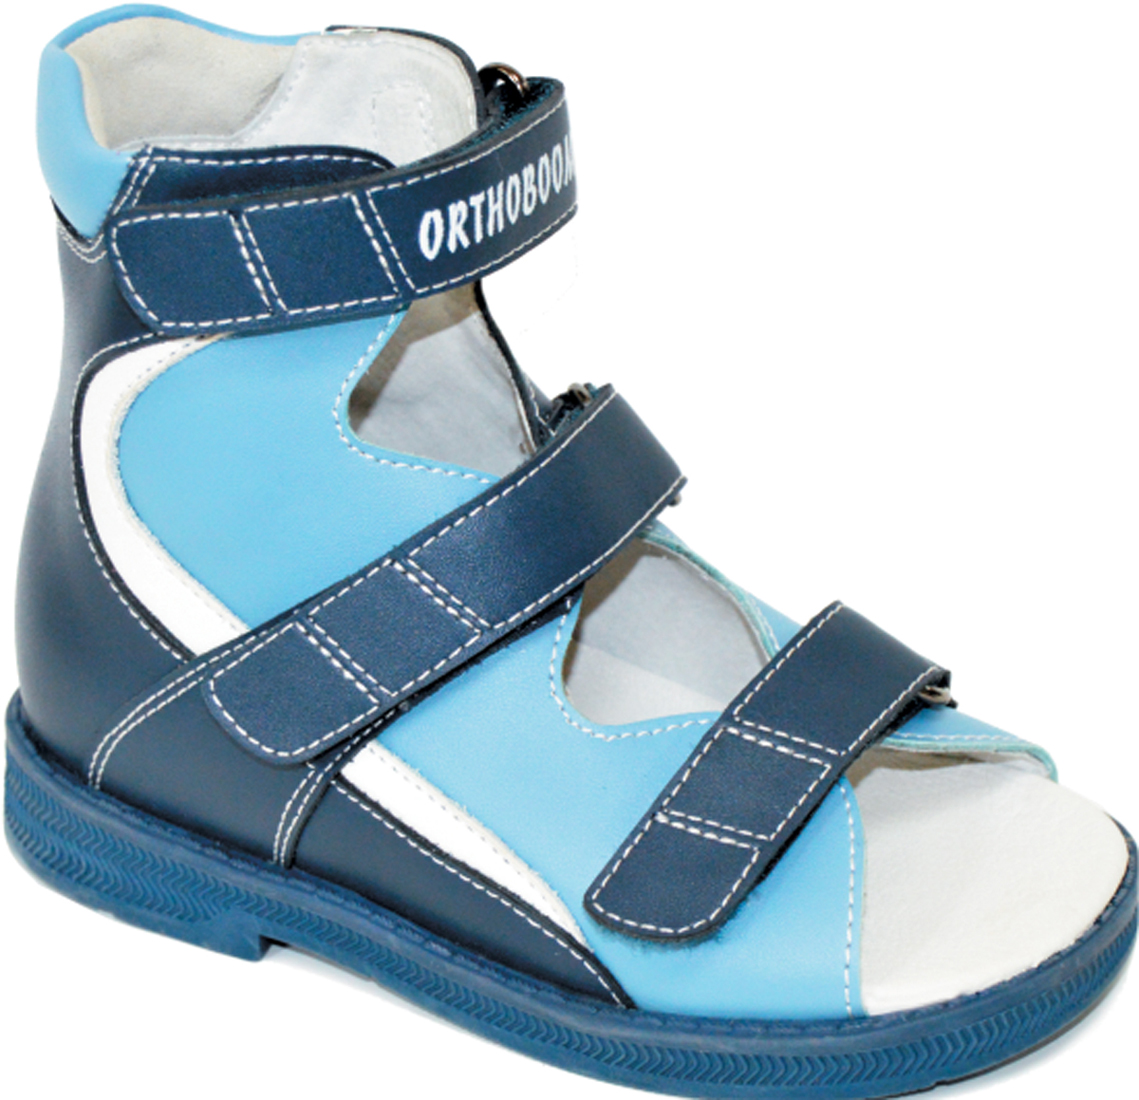 Сандалии для мальчика Orthoboom, цвет: темно-синий-голубой-белый. 71597-33. Размер 28